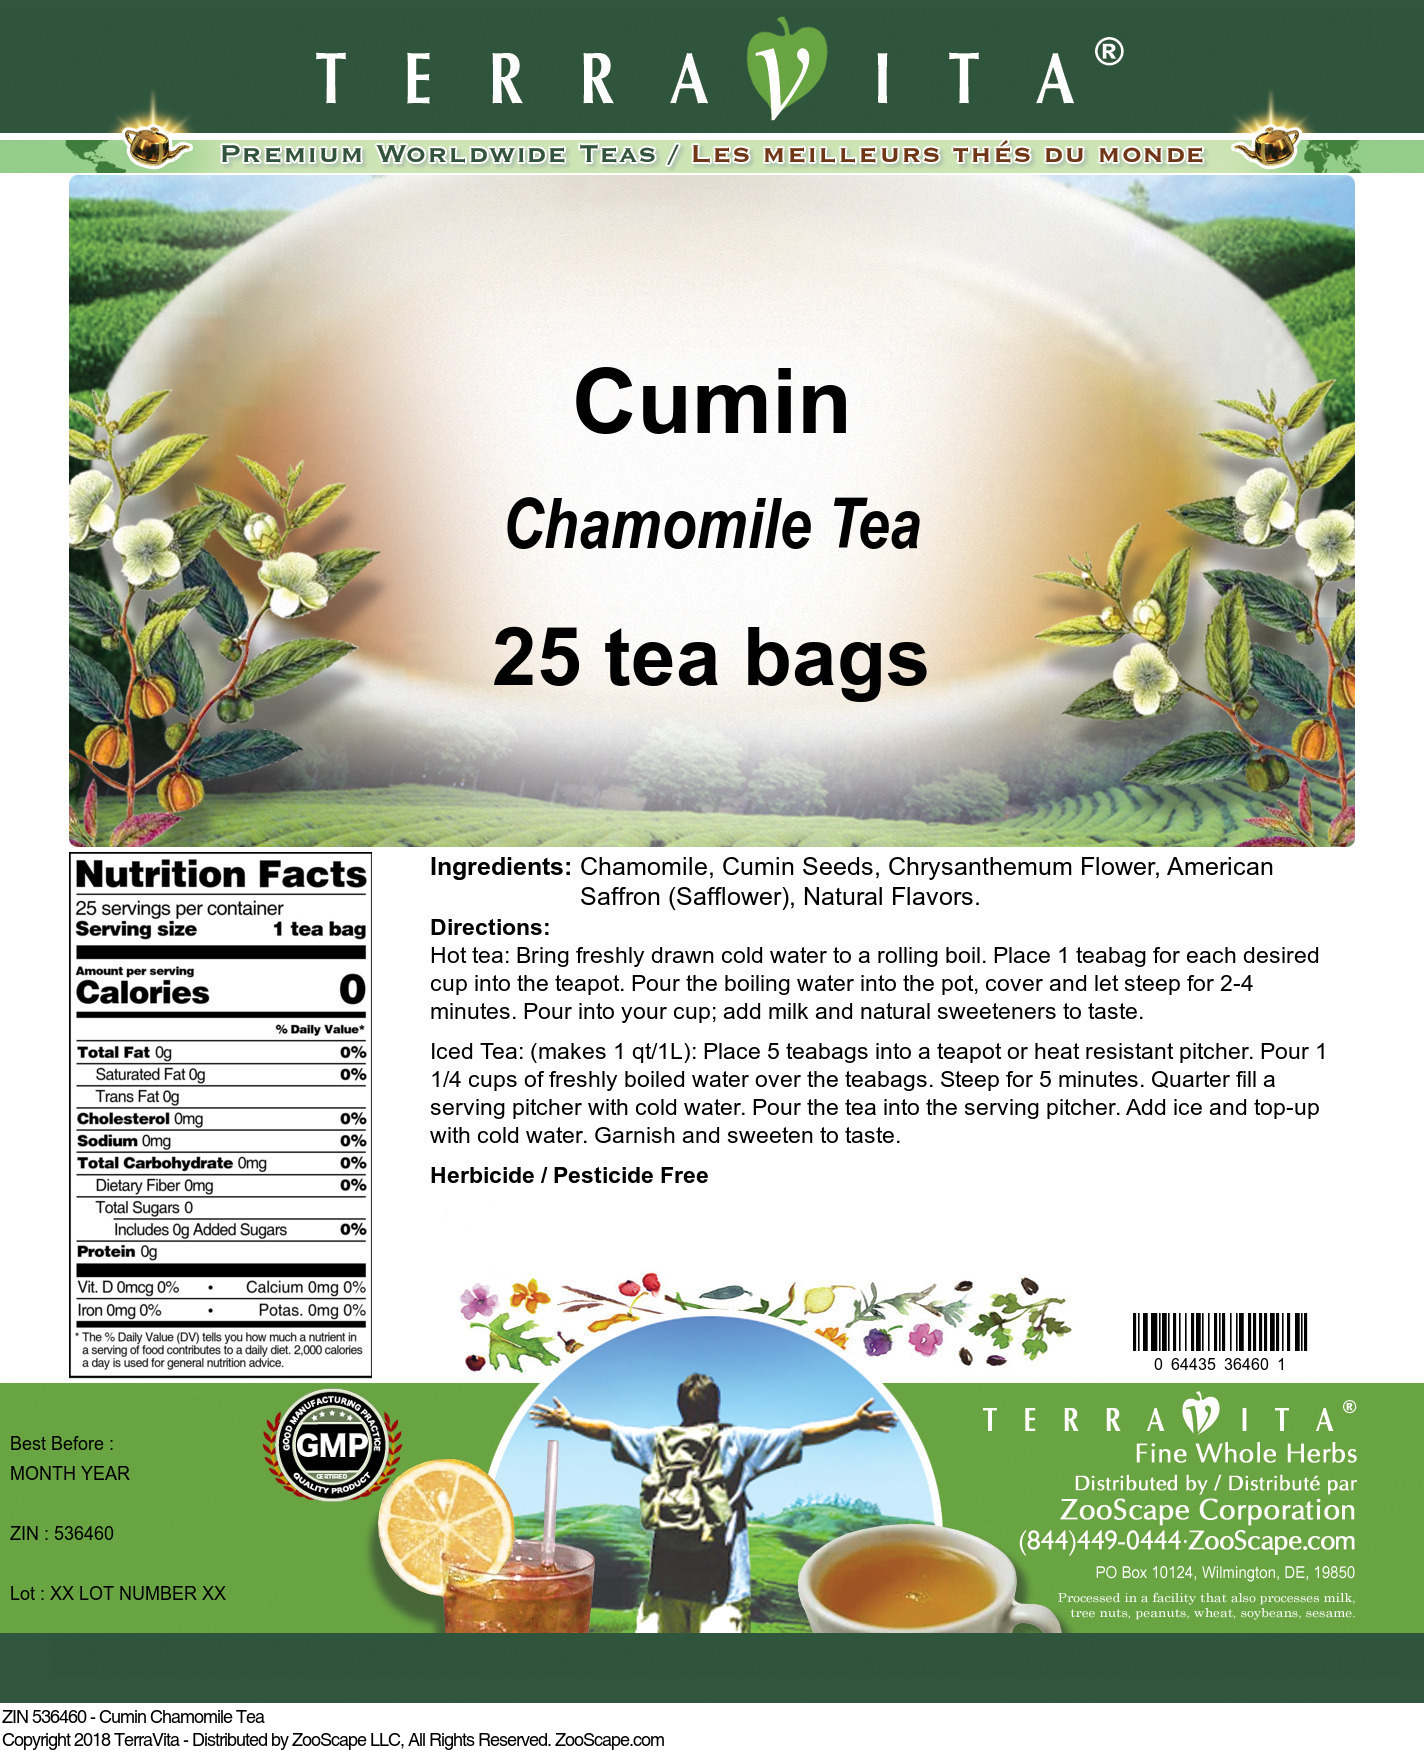 Cumin Chamomile Tea - Label